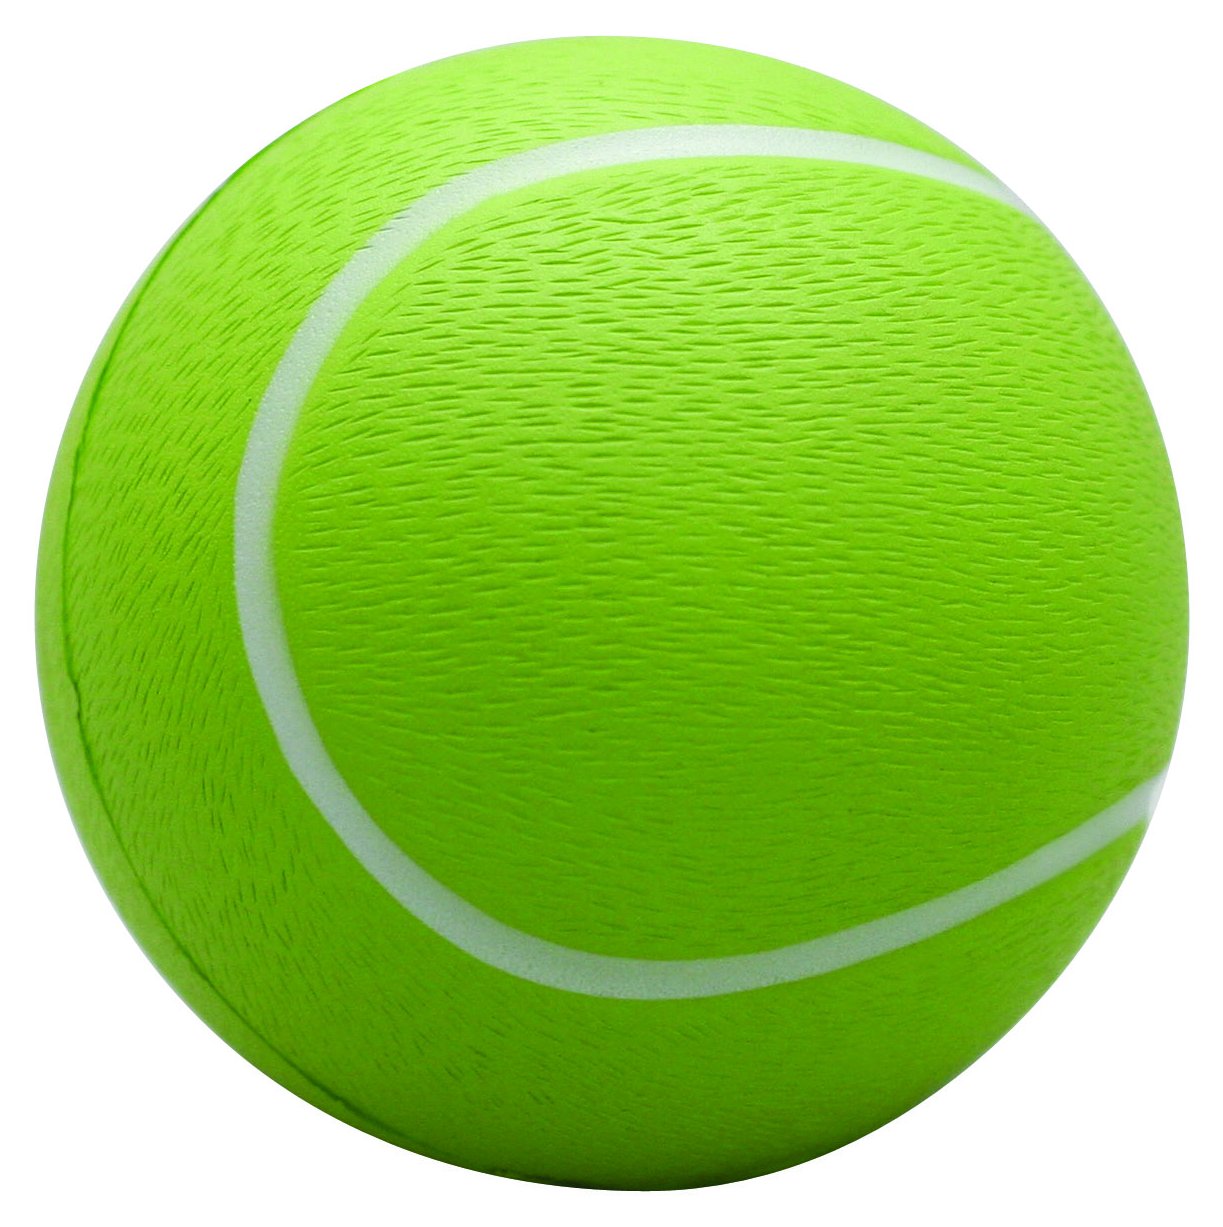 Green Tennis Ball - Viewing Gallery